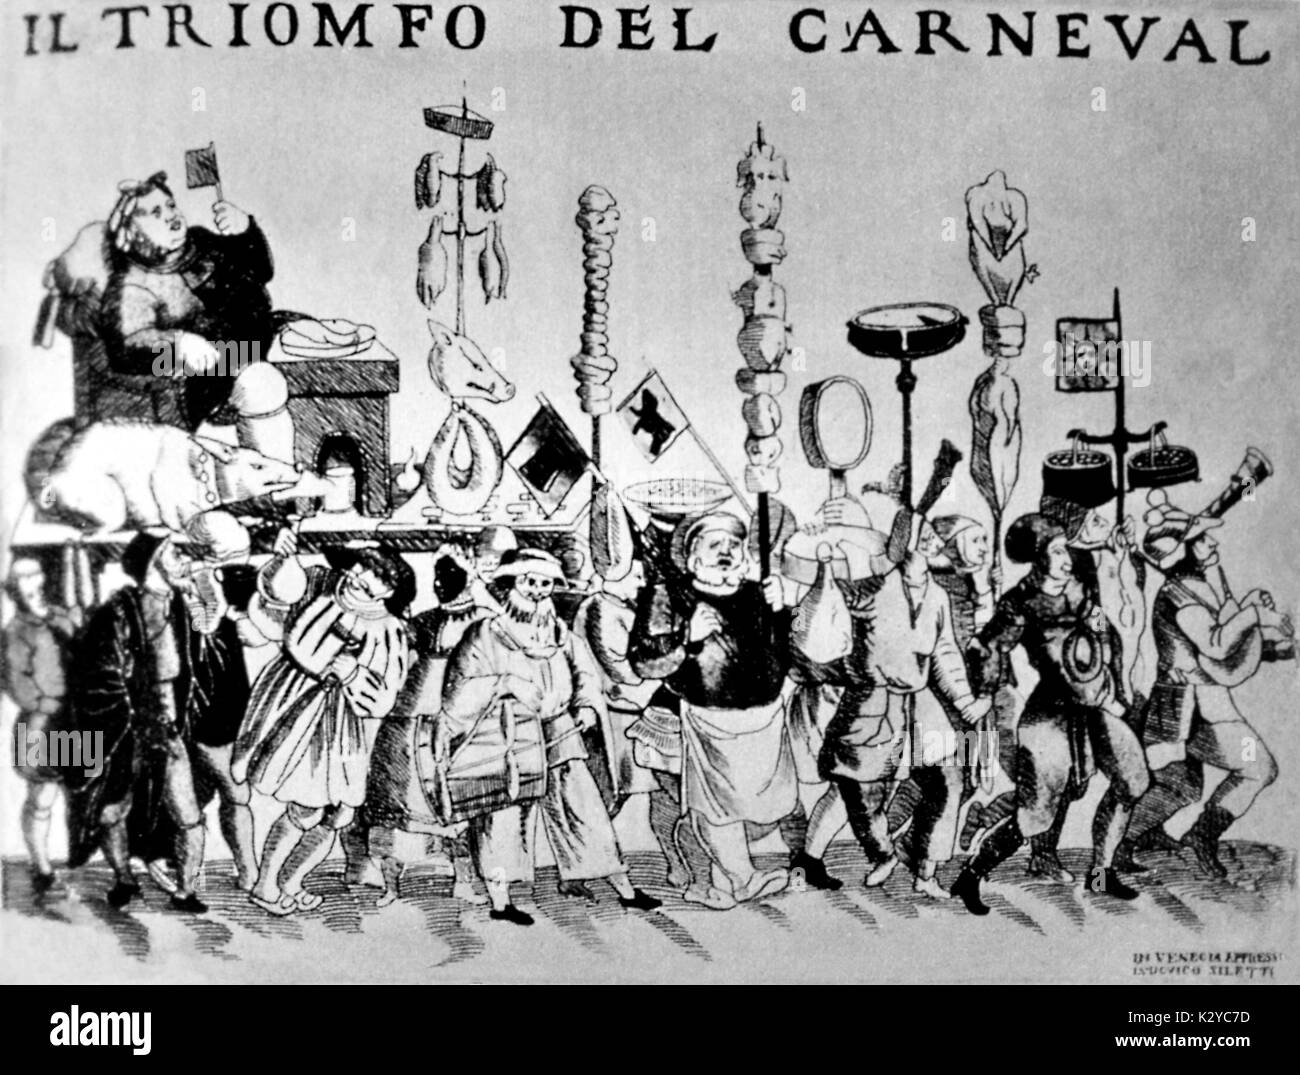 VENICE - Venetian Pamphlet - Carnival Il Trionfo del Carneval (The Triumph of Carnival). Stock Photo